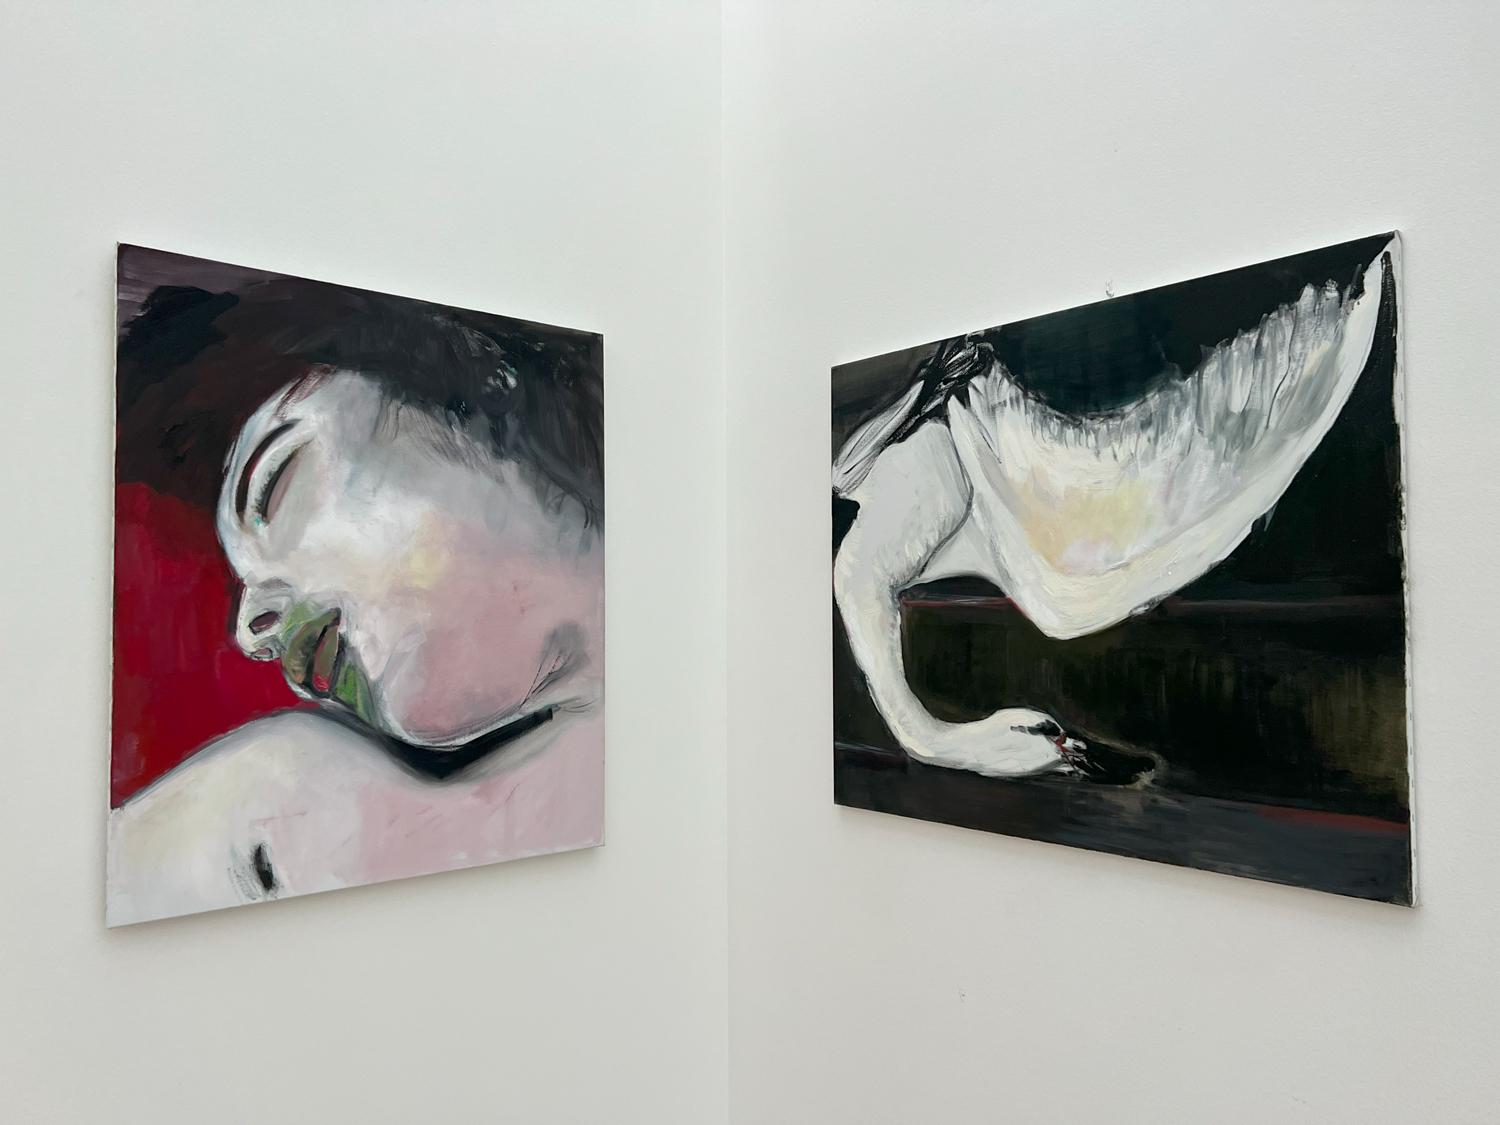 Вид экспозиции «Dance With Daemons» в Fondation Beyeler. Marlene Dumas. Слева: Broken White, 2006. Справа: Swan, 2005